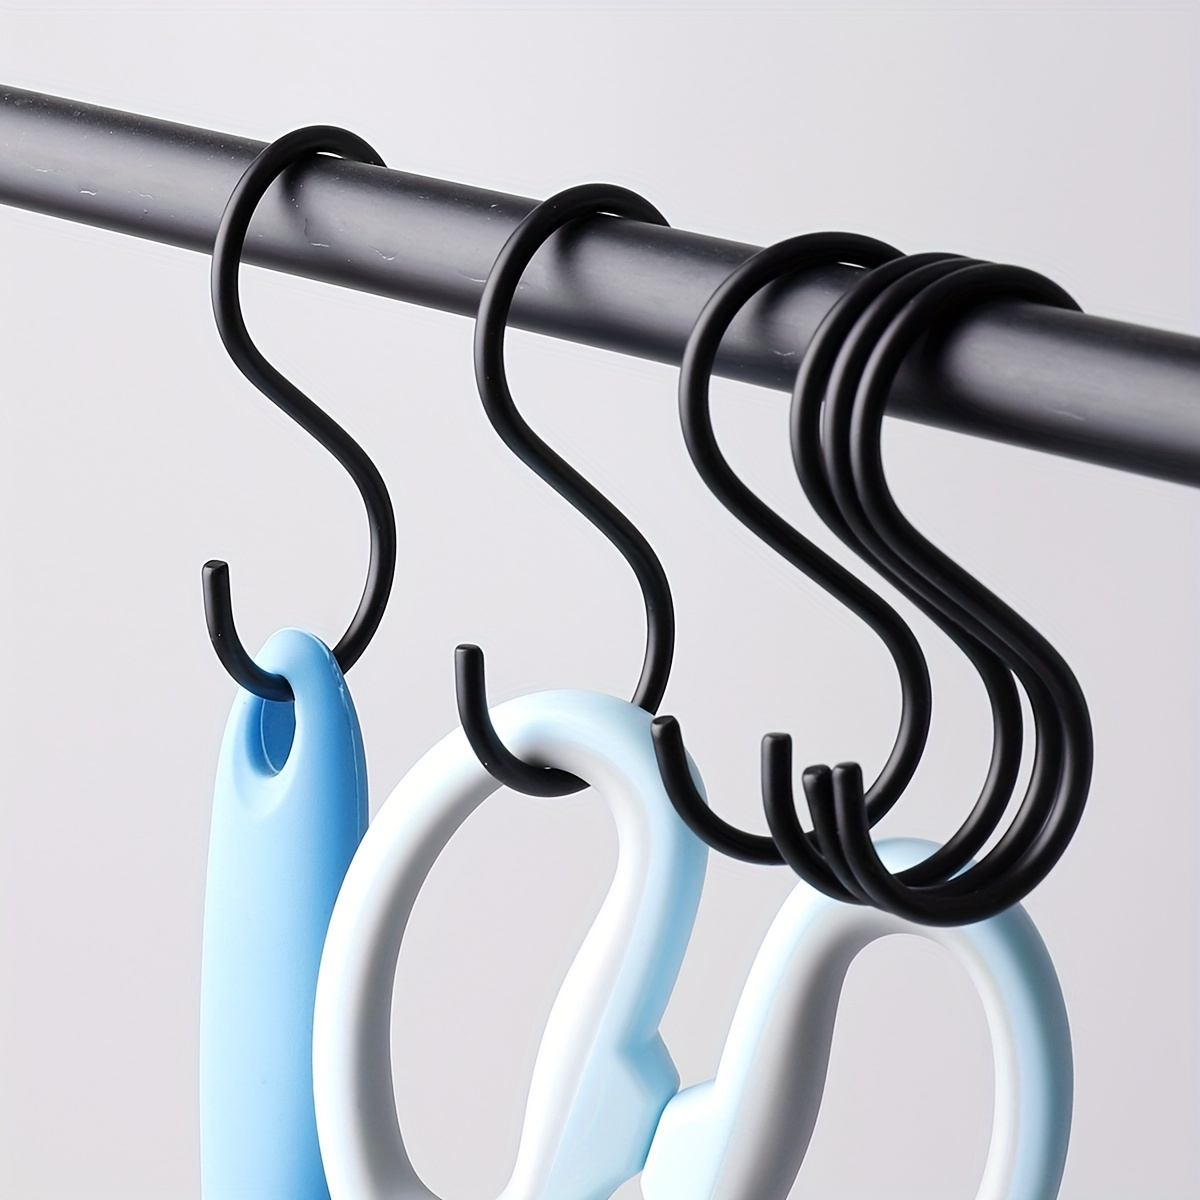 Heavy Duty S Hooks Metal S Shaped Hooks Black Hanging Hooks 2.75” Hangers  for Kitchenware Pots Pans Plants Bags Towels